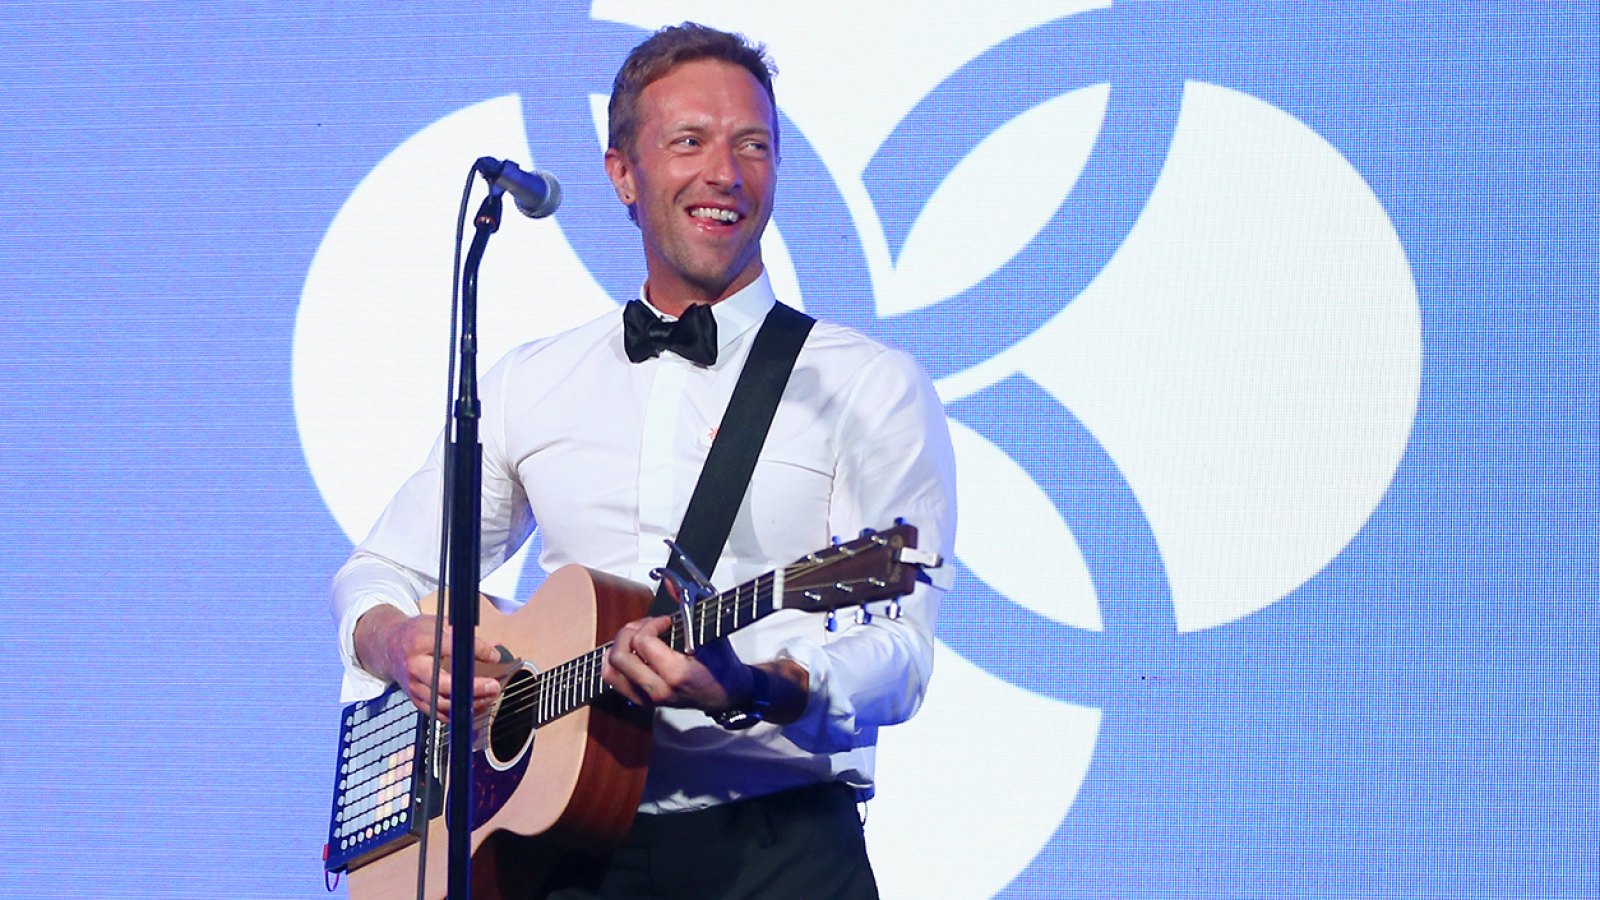 Chris Martin performs onstage at the Leonardo DiCaprio Foundation Gala